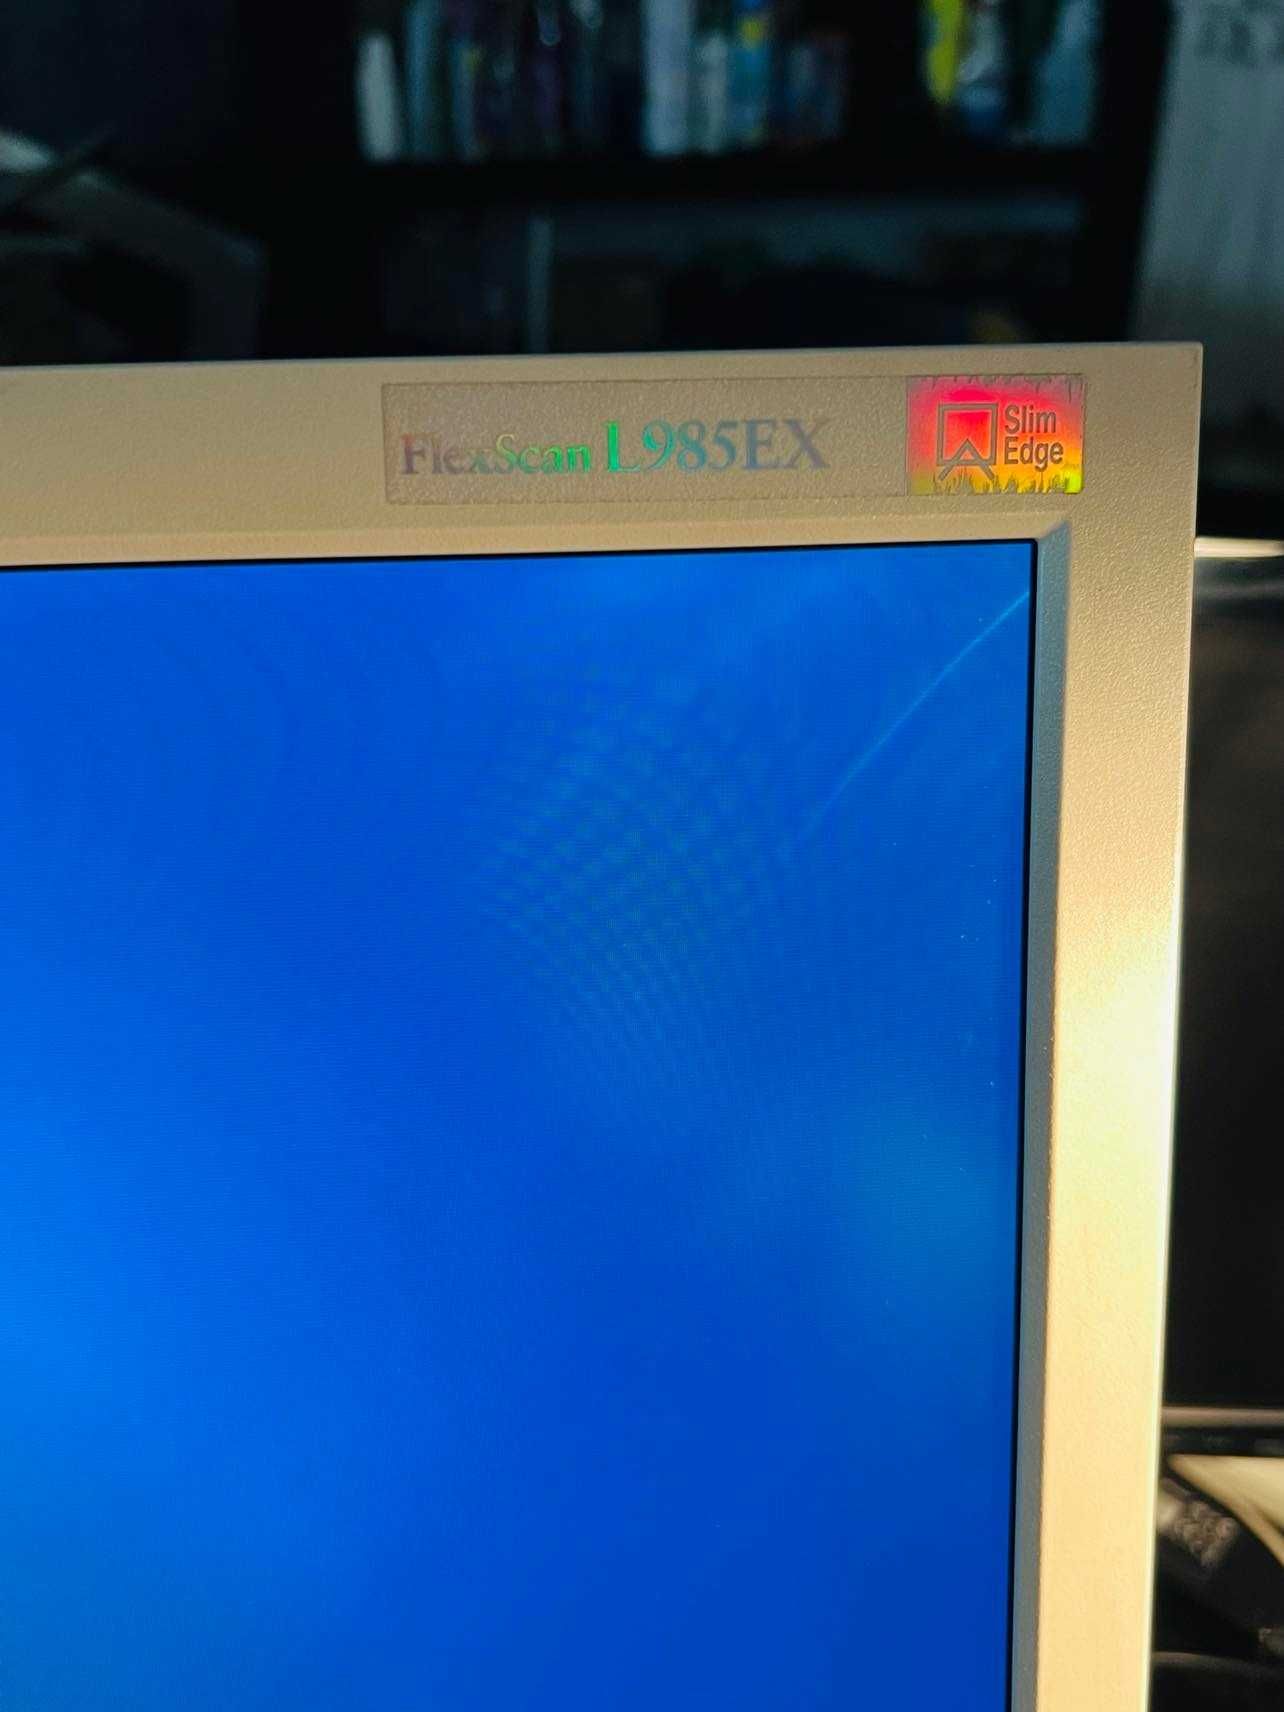 monitor eizo flexscan L985EX